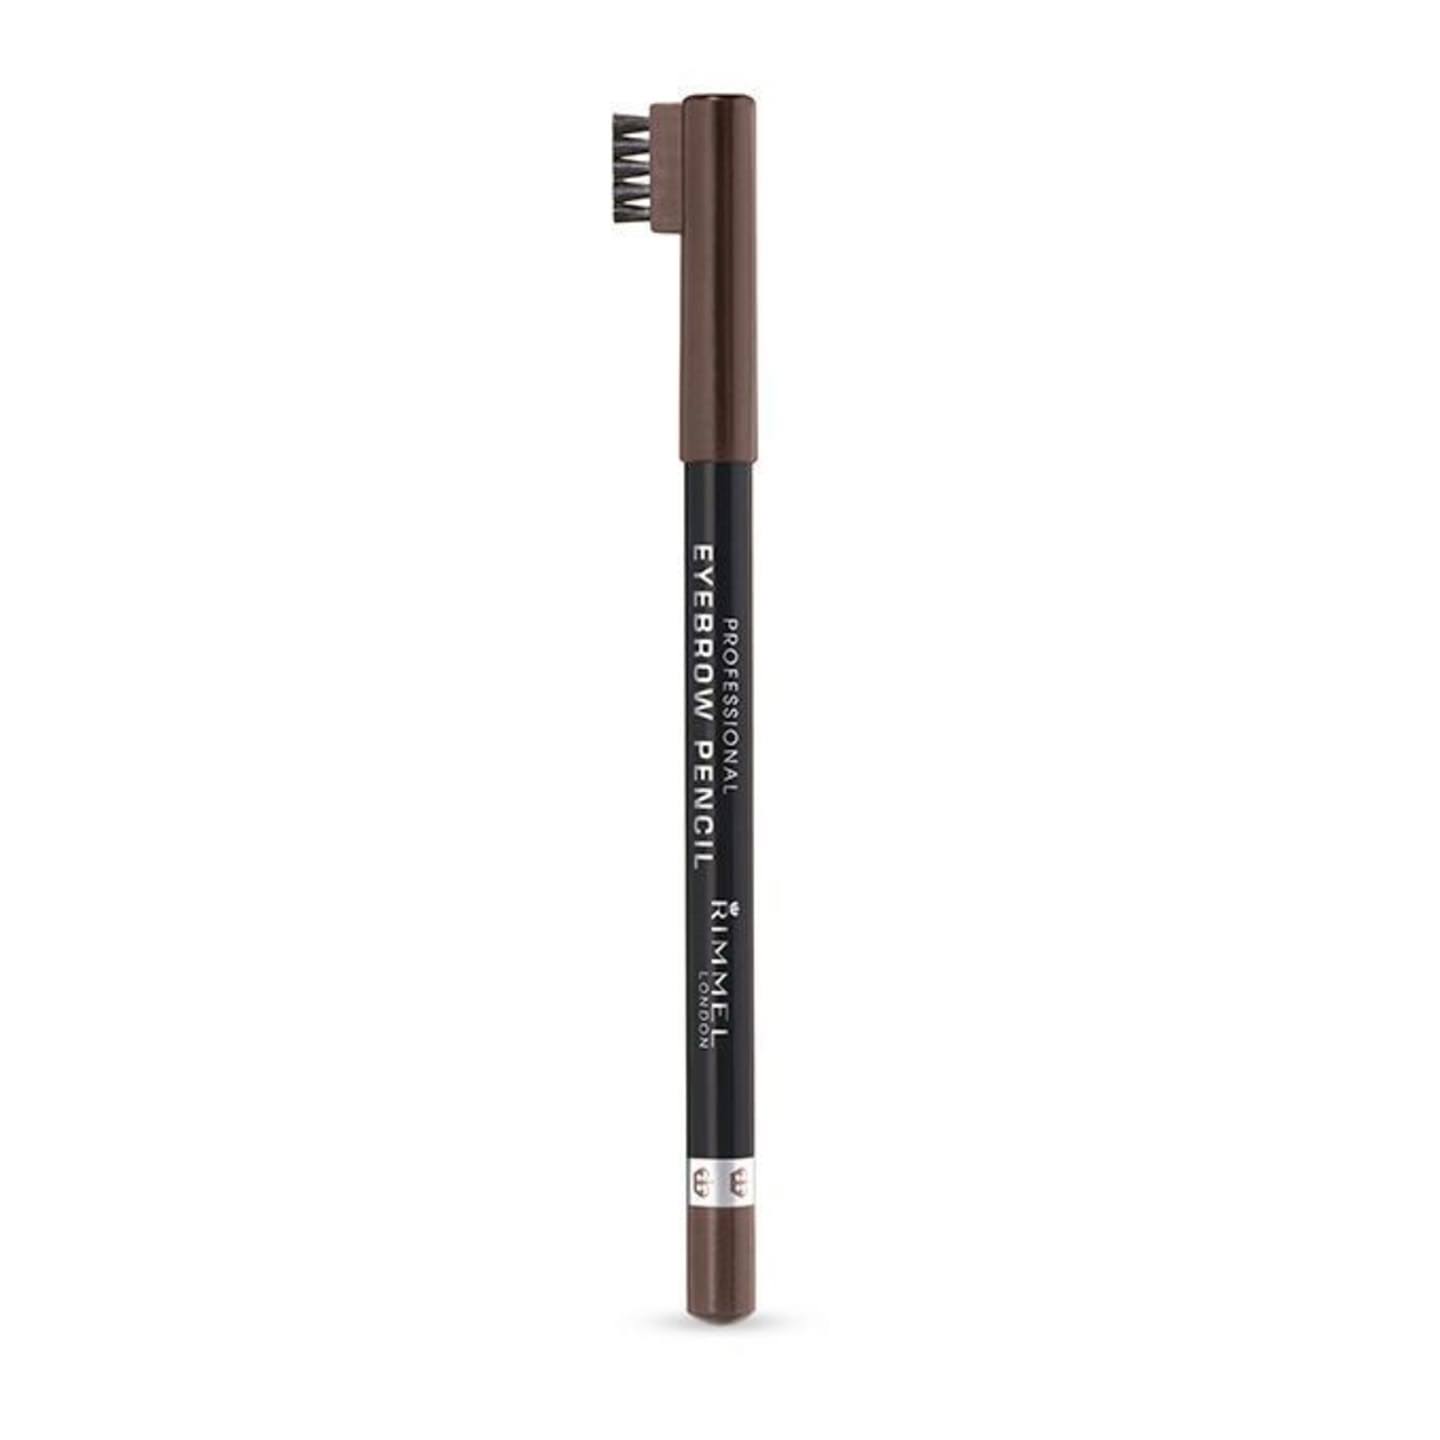 Rimmel London Professional Eyebrow Pencil - 002 Hazel, 1.4g